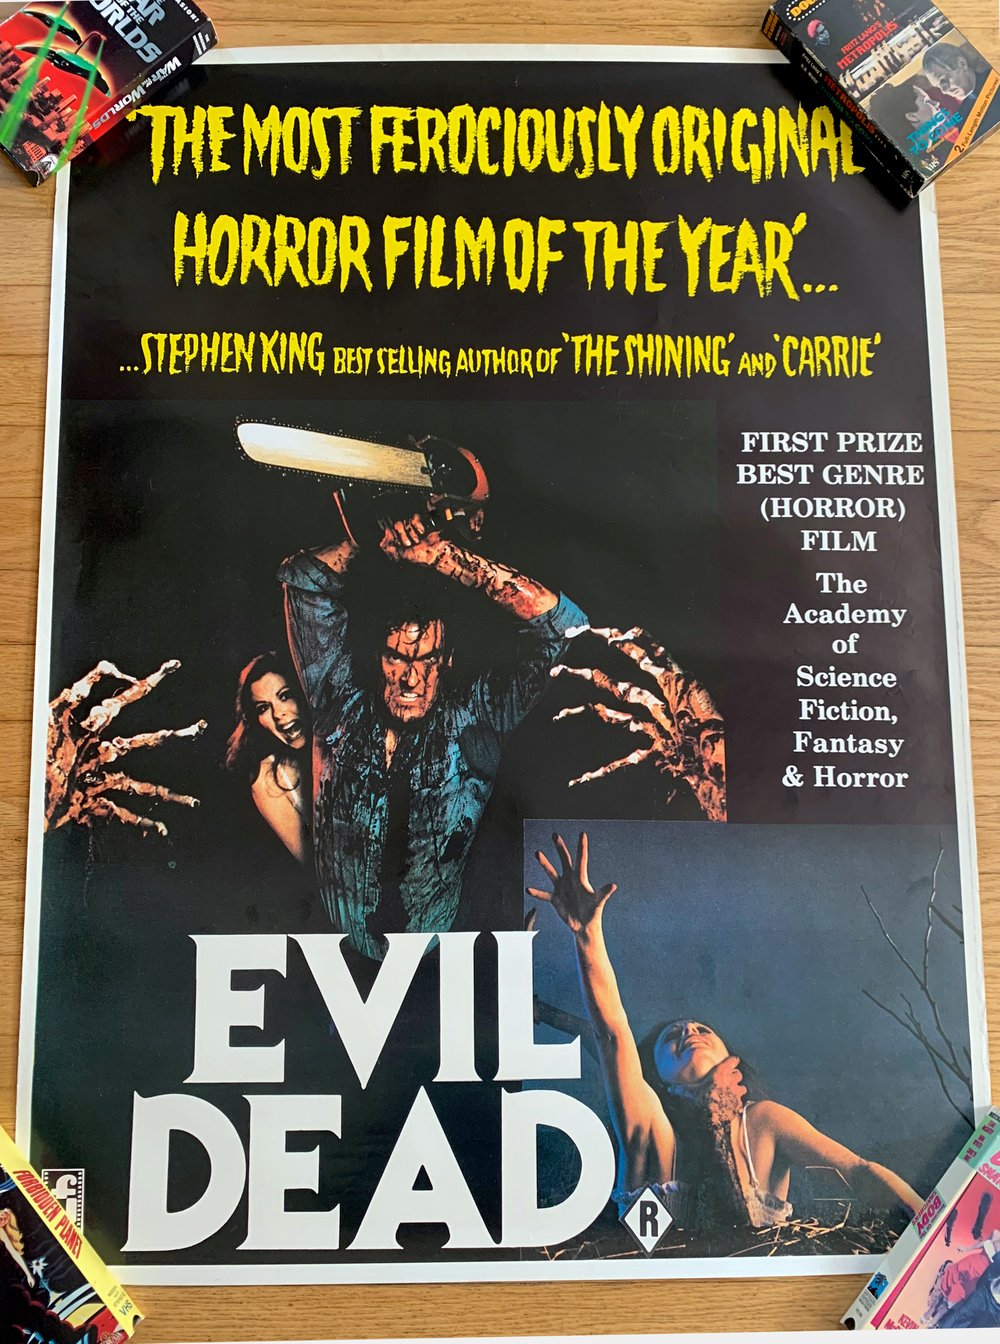 1983 THE EVIL DEAD Original Australian One Sheet Movie Poster